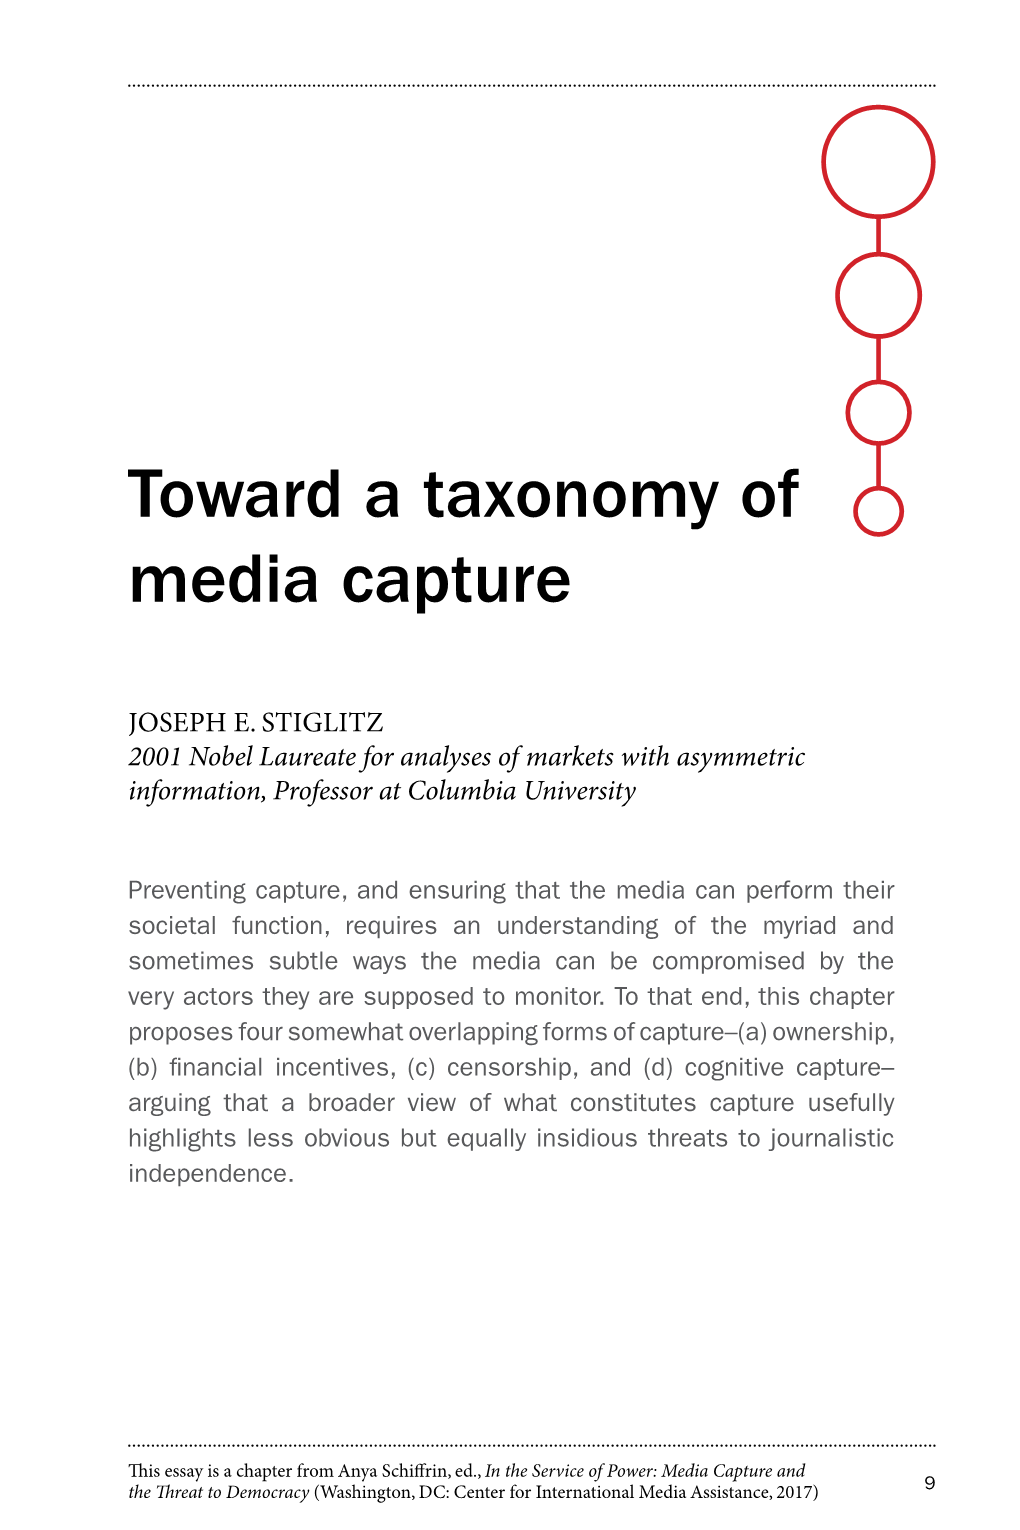 Toward a Taxonomy of Media Capture